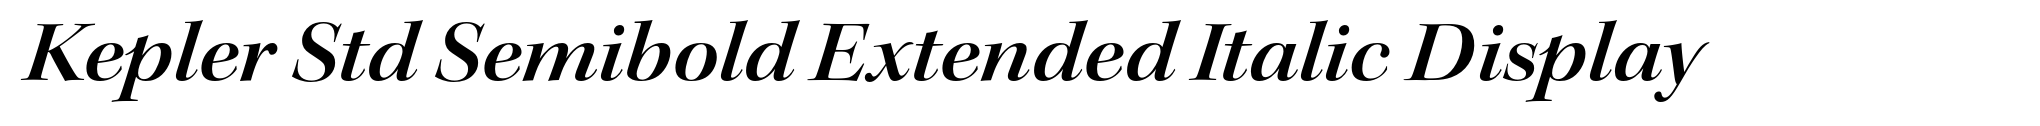 Kepler Std Semibold Extended Italic Display image